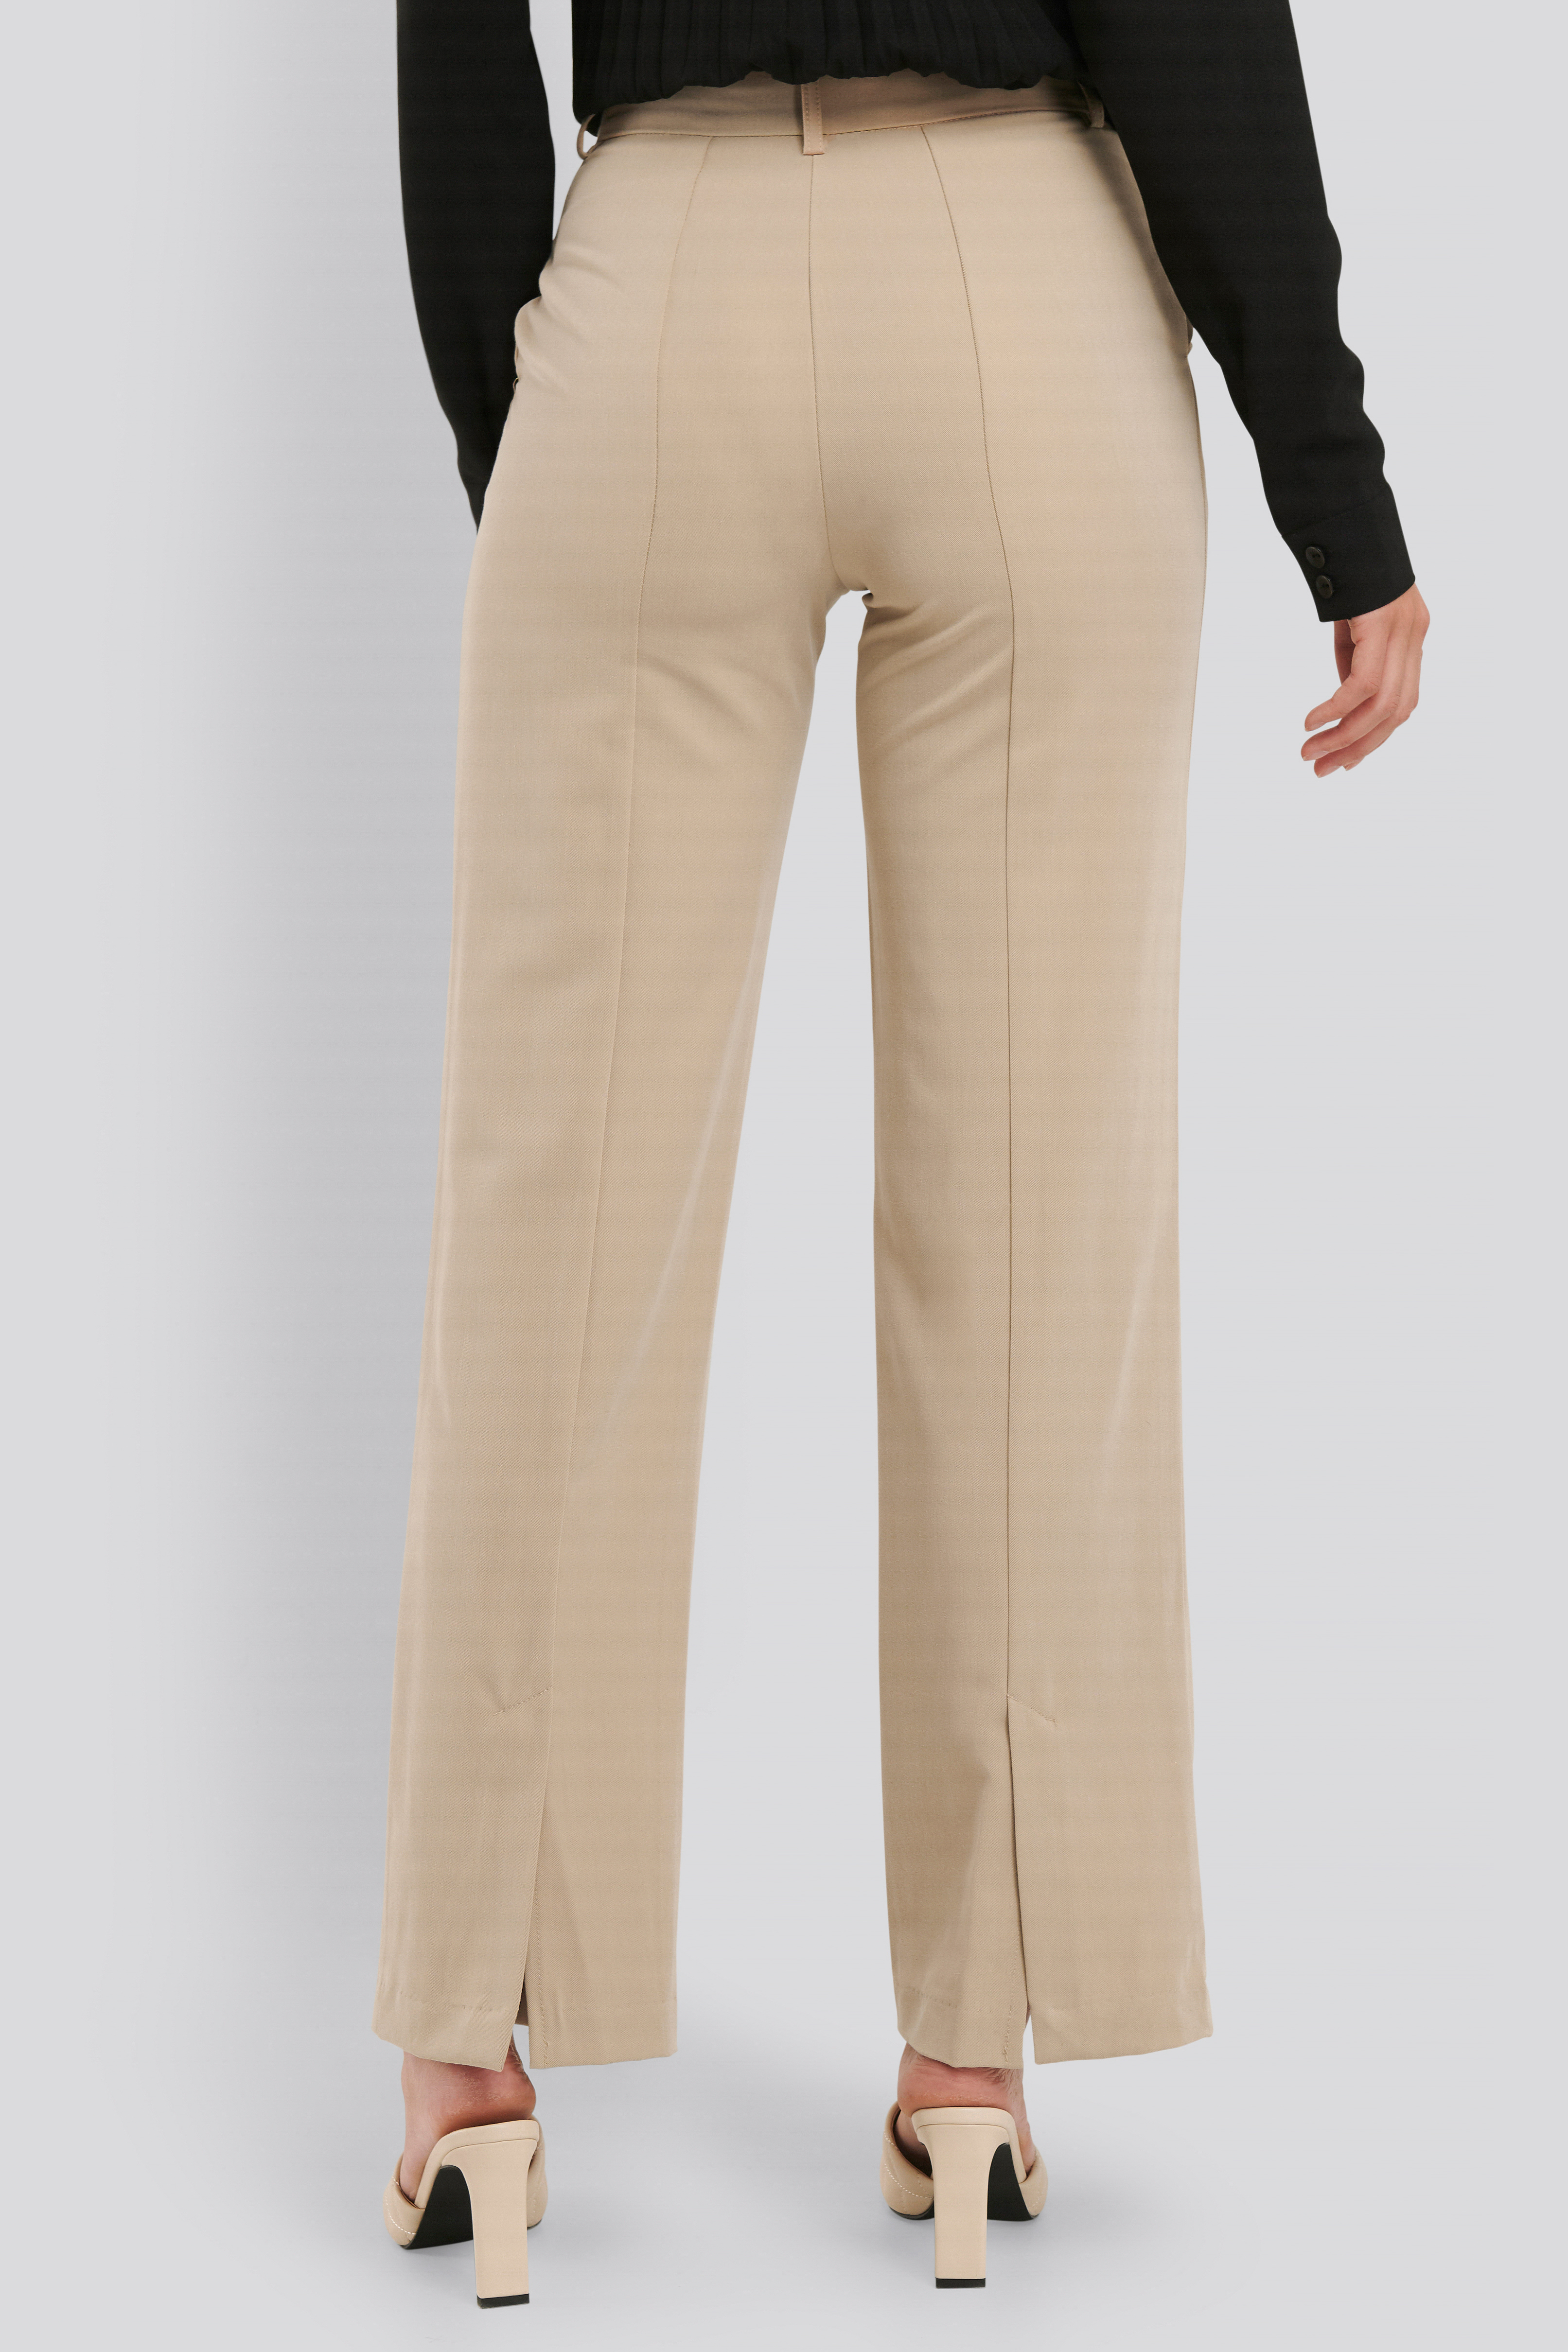 Back Slit Suit Pants Beige NA-KD | tyello.com